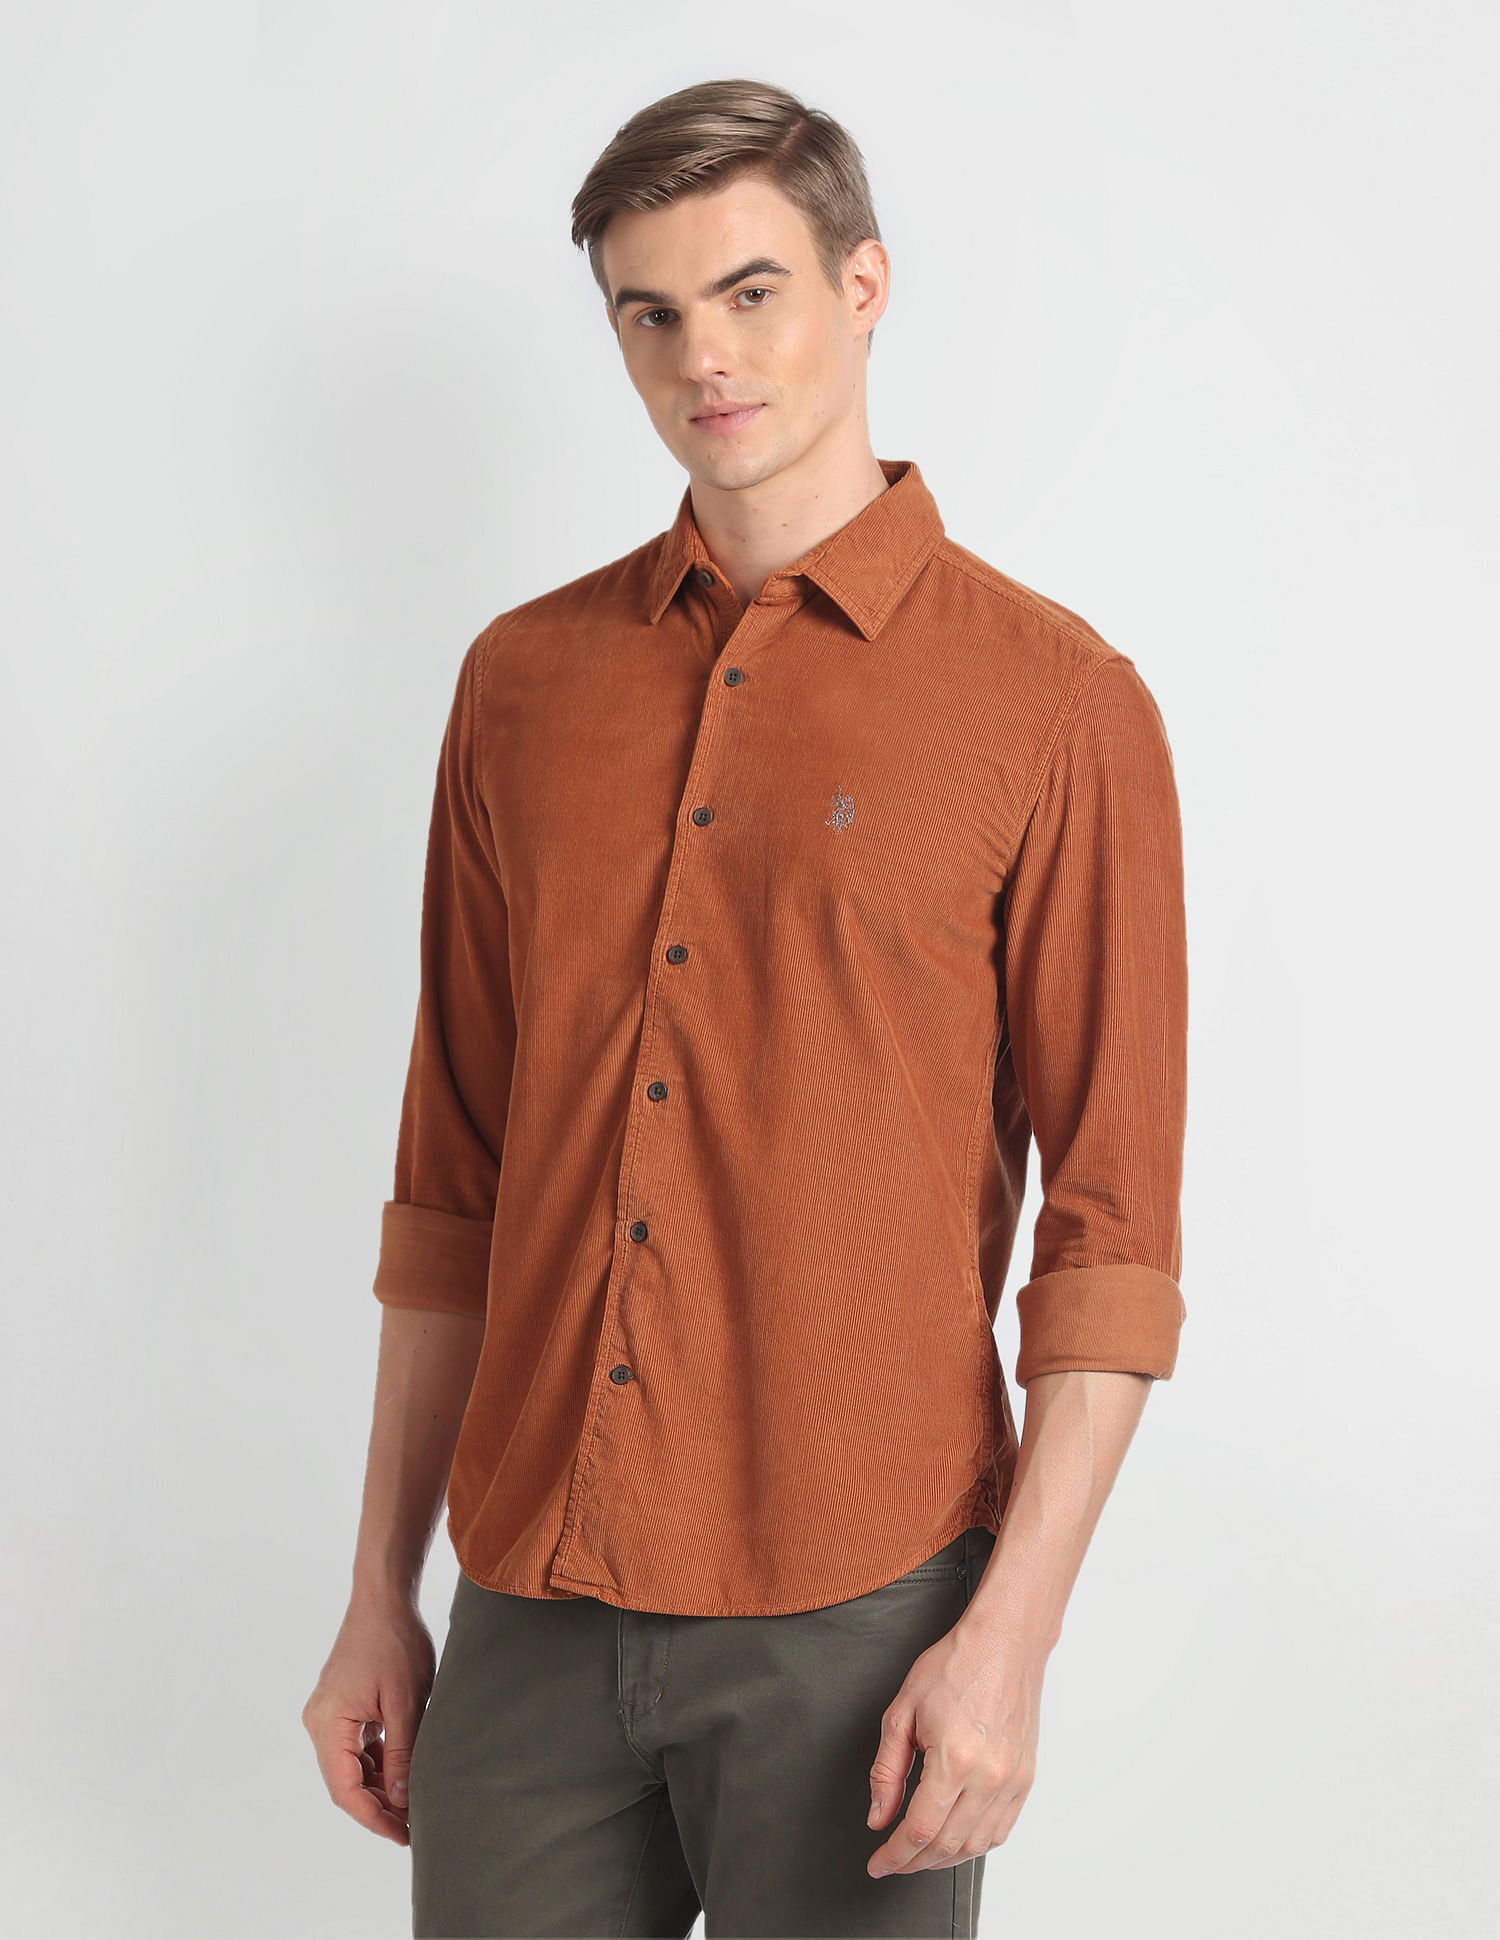 SLATIOM Slim Fit Street Denim Shirt for Men Long Sleeve Classic Casual  Men's Clothing (Color : B, Size : M) : Amazon.ca: Clothing, Shoes &  Accessories